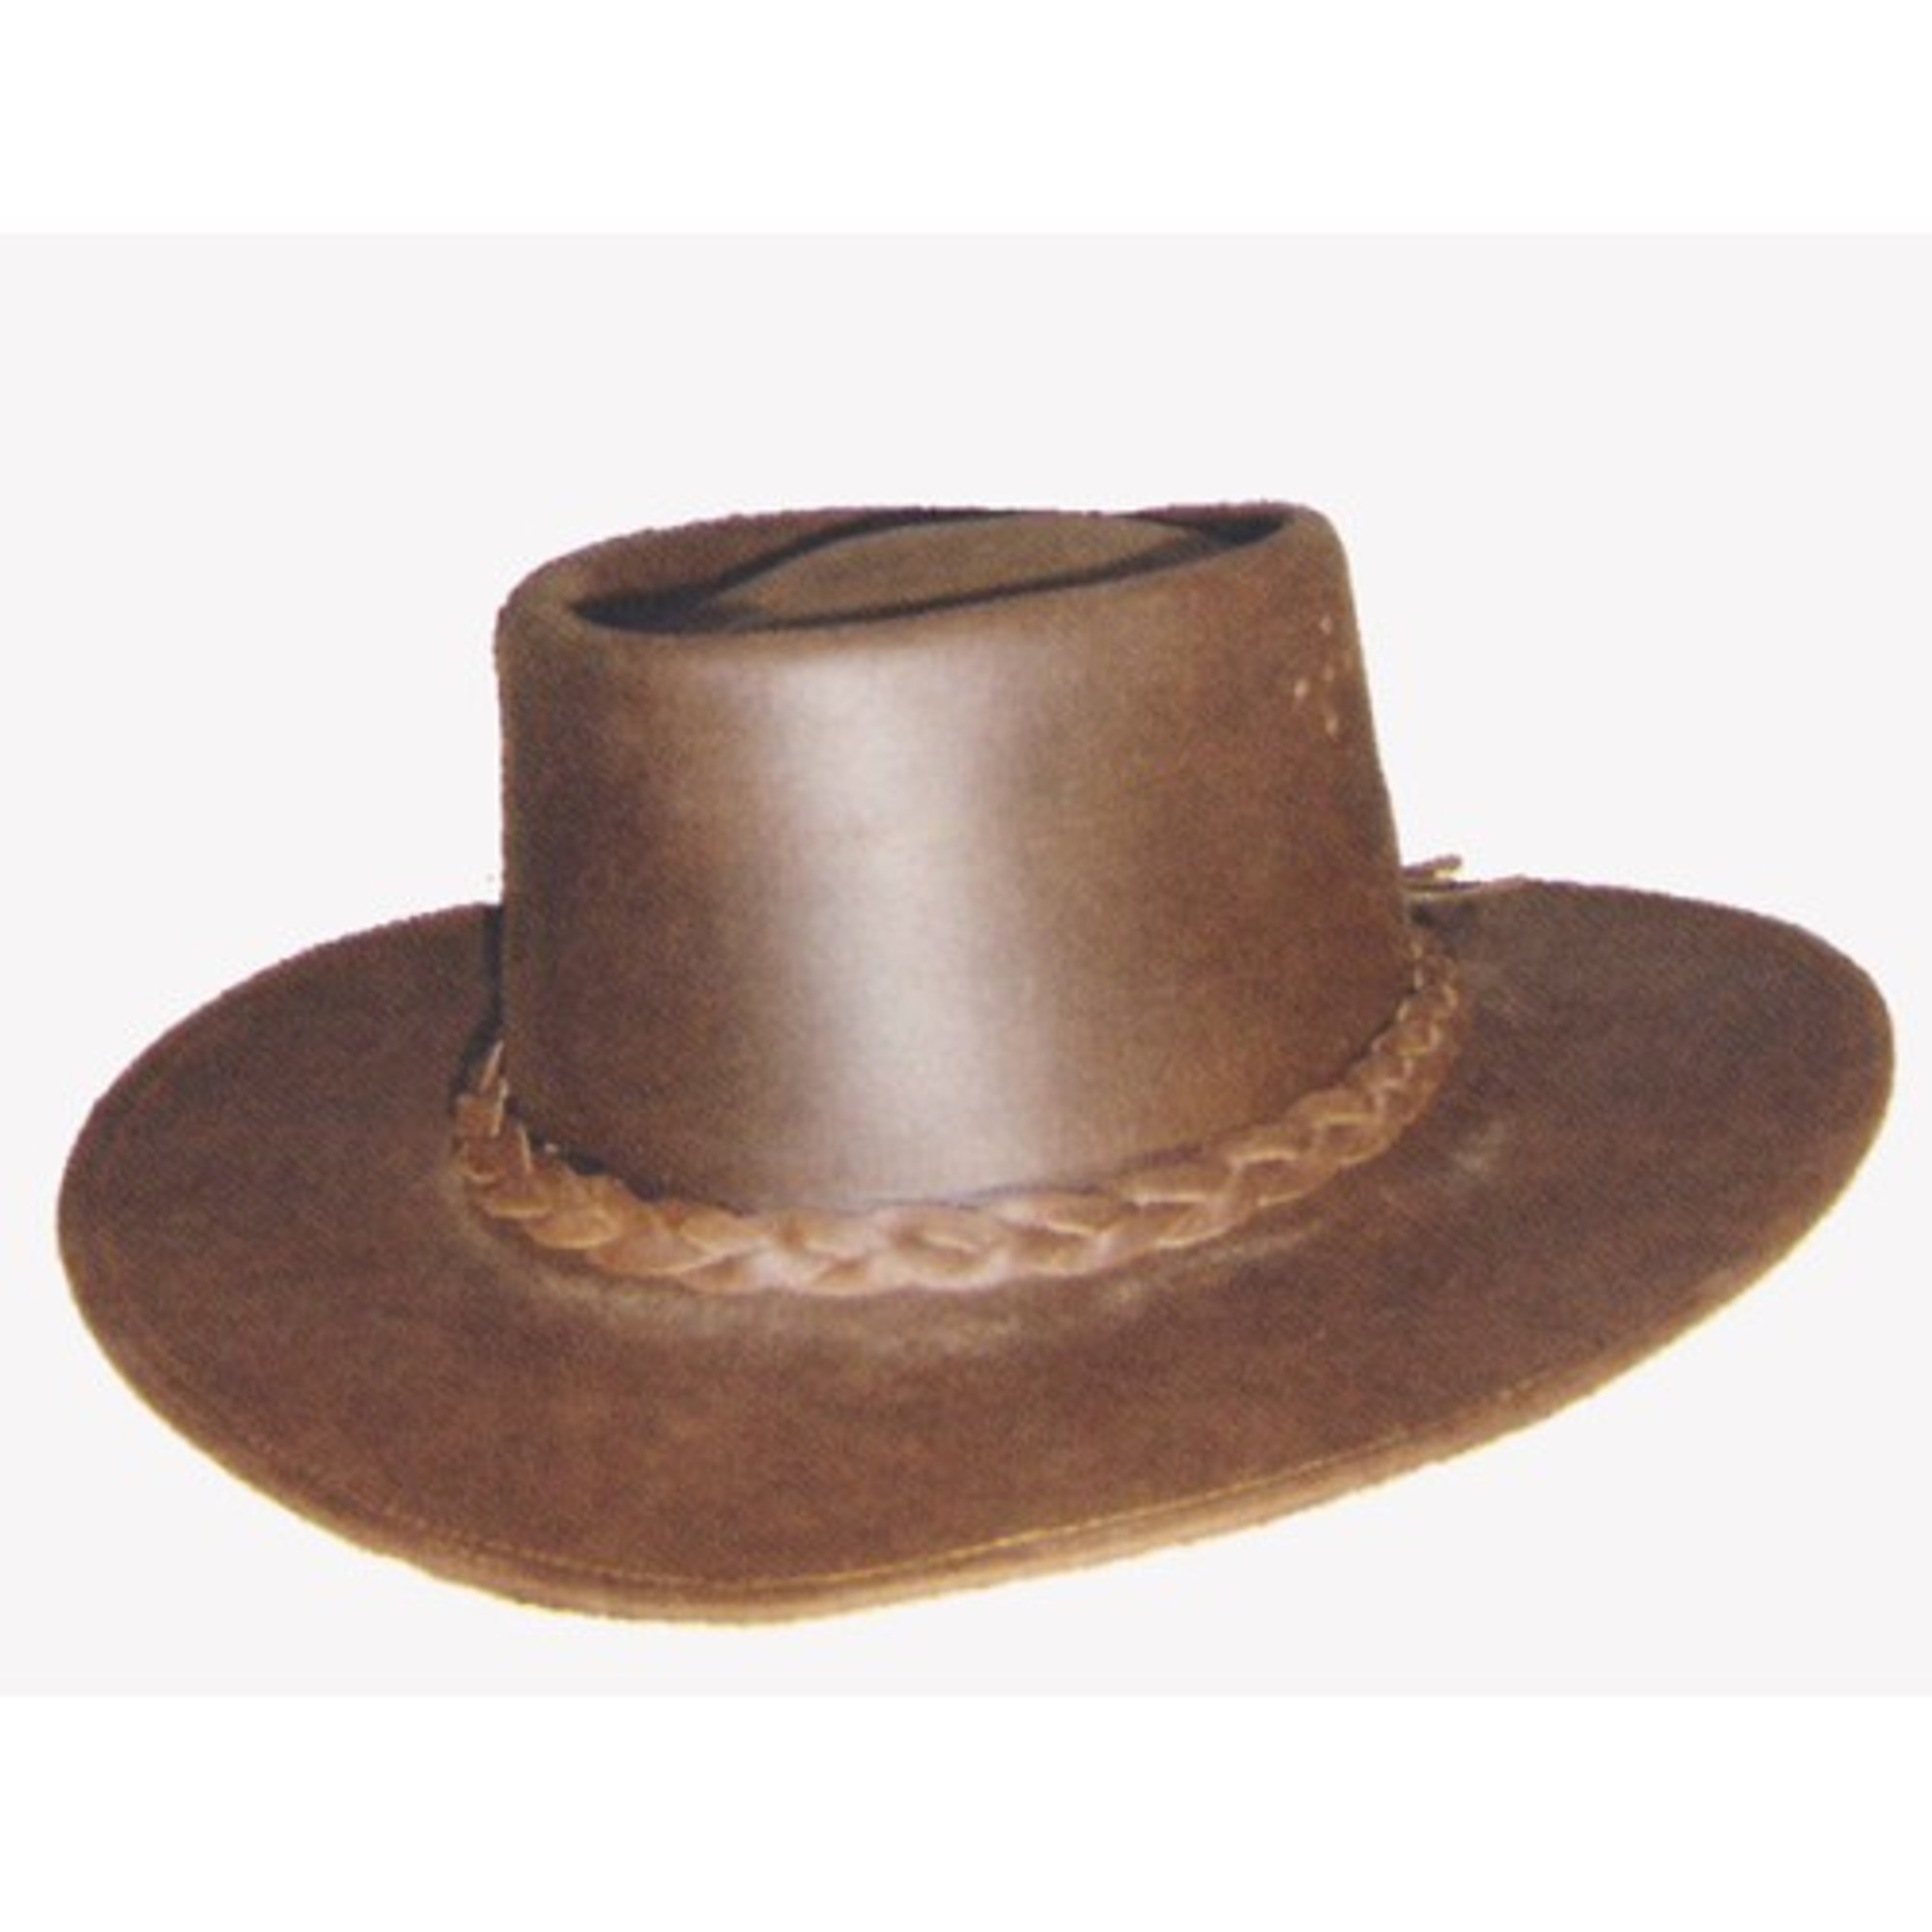 Denix Leather Bush Hat - Medium